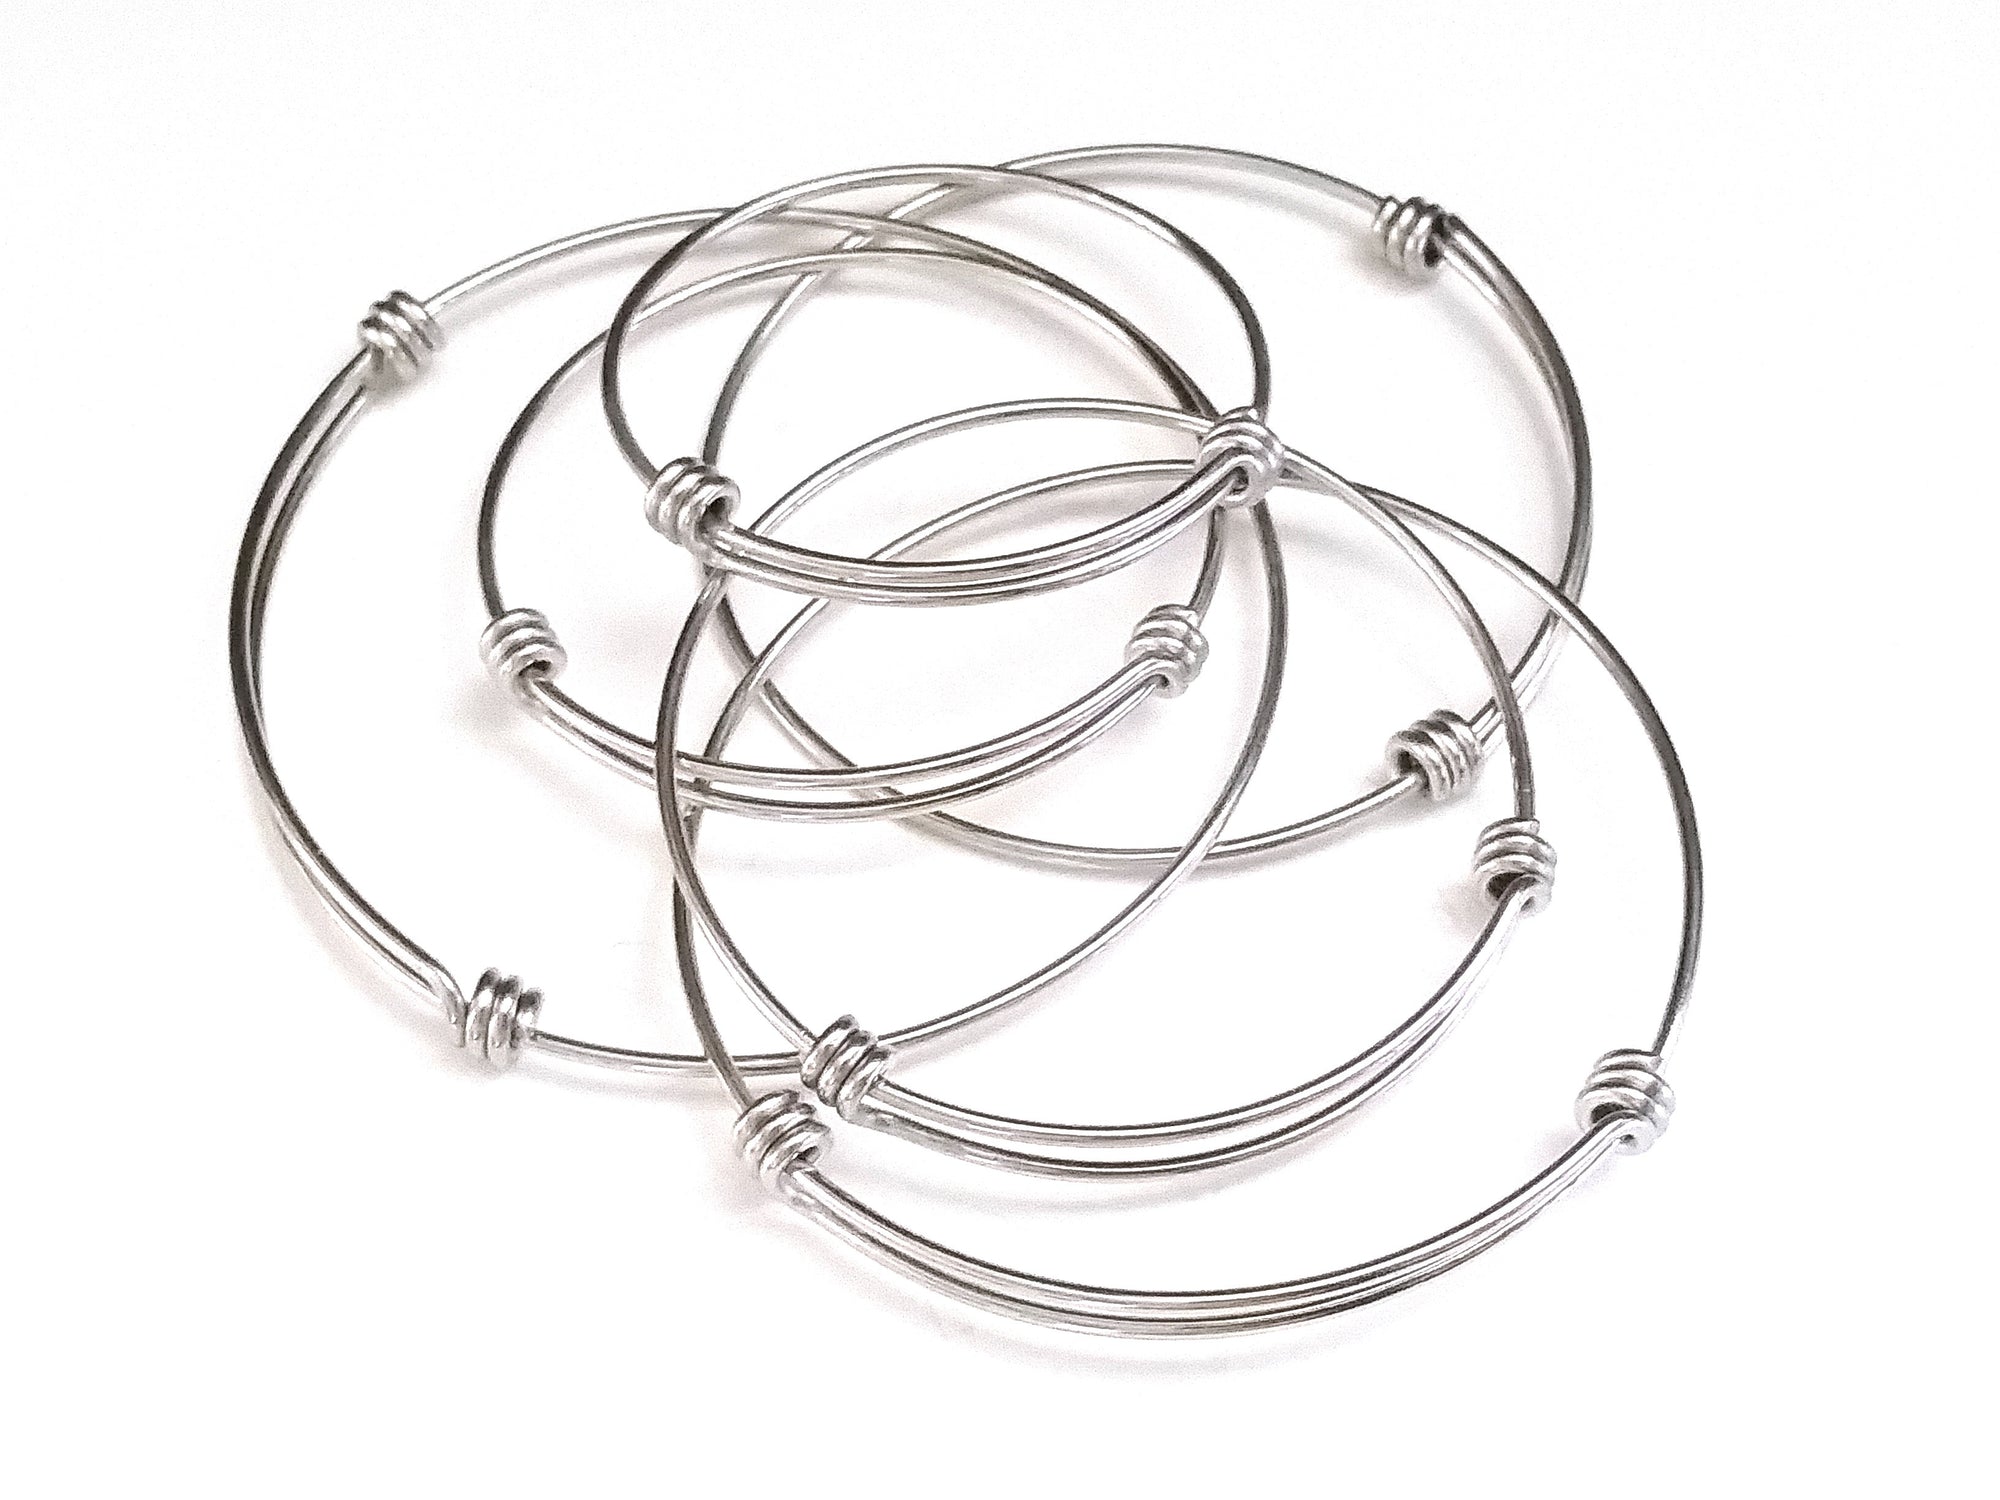 Abs Plastic Bracelet Bangle Gauge Sizer 5 To 10inch Jewelry